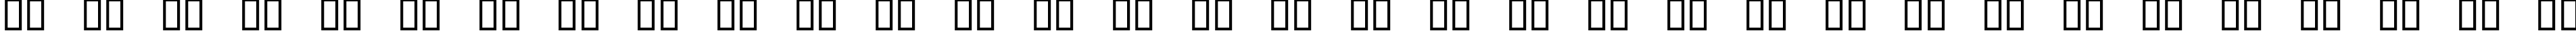 Пример написания русского алфавита шрифтом Japanese Brush